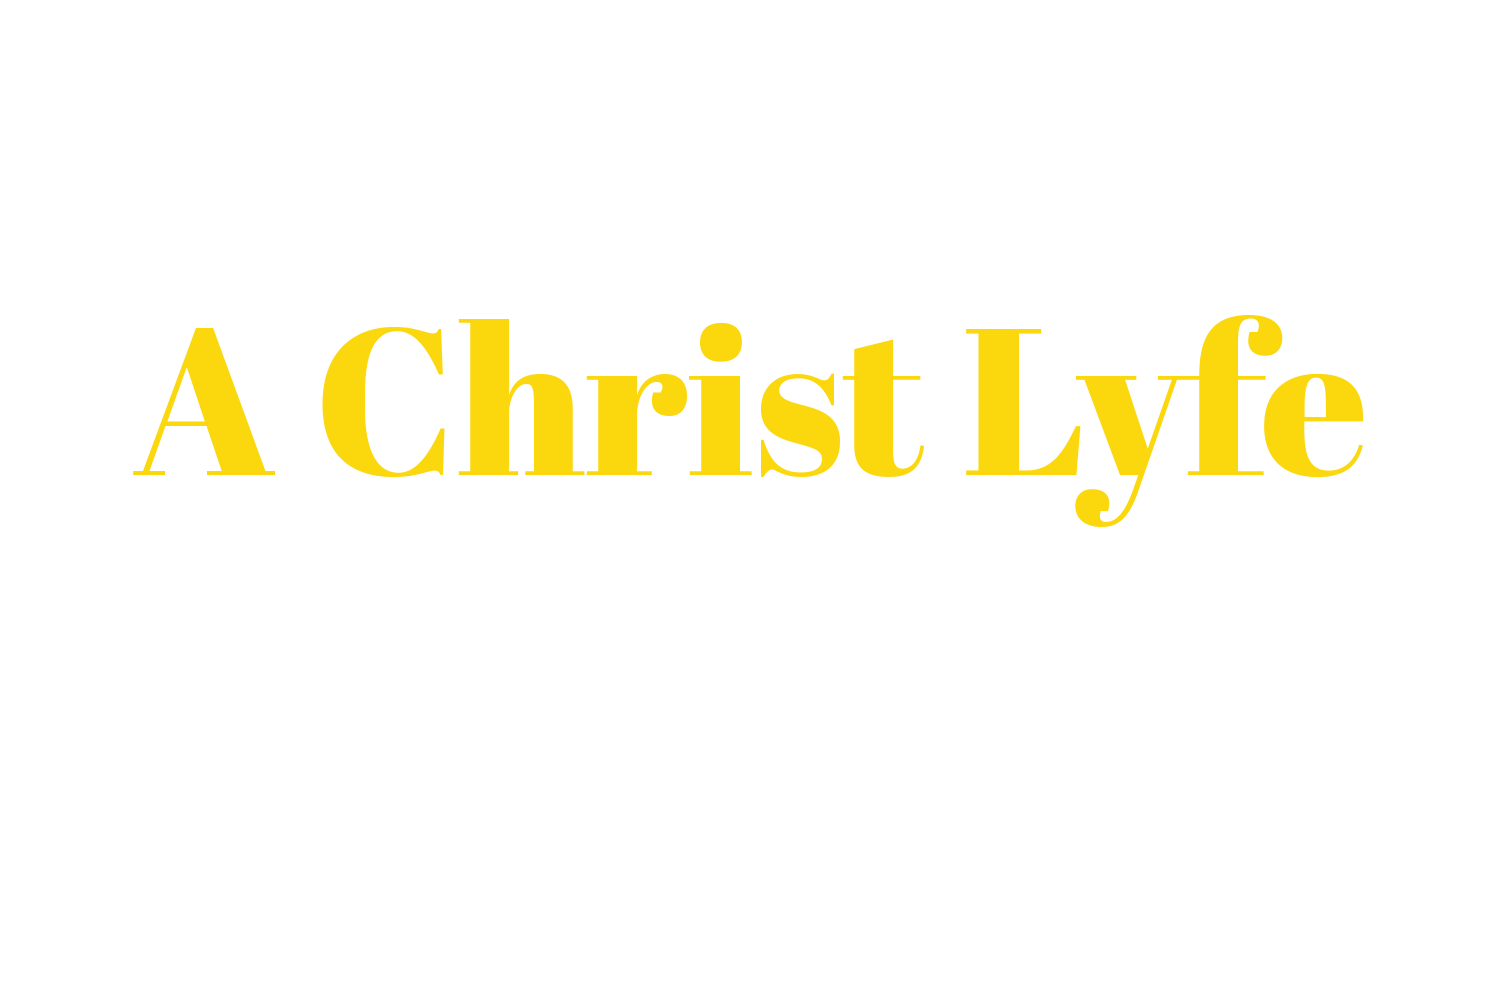 A Christ Lyfe